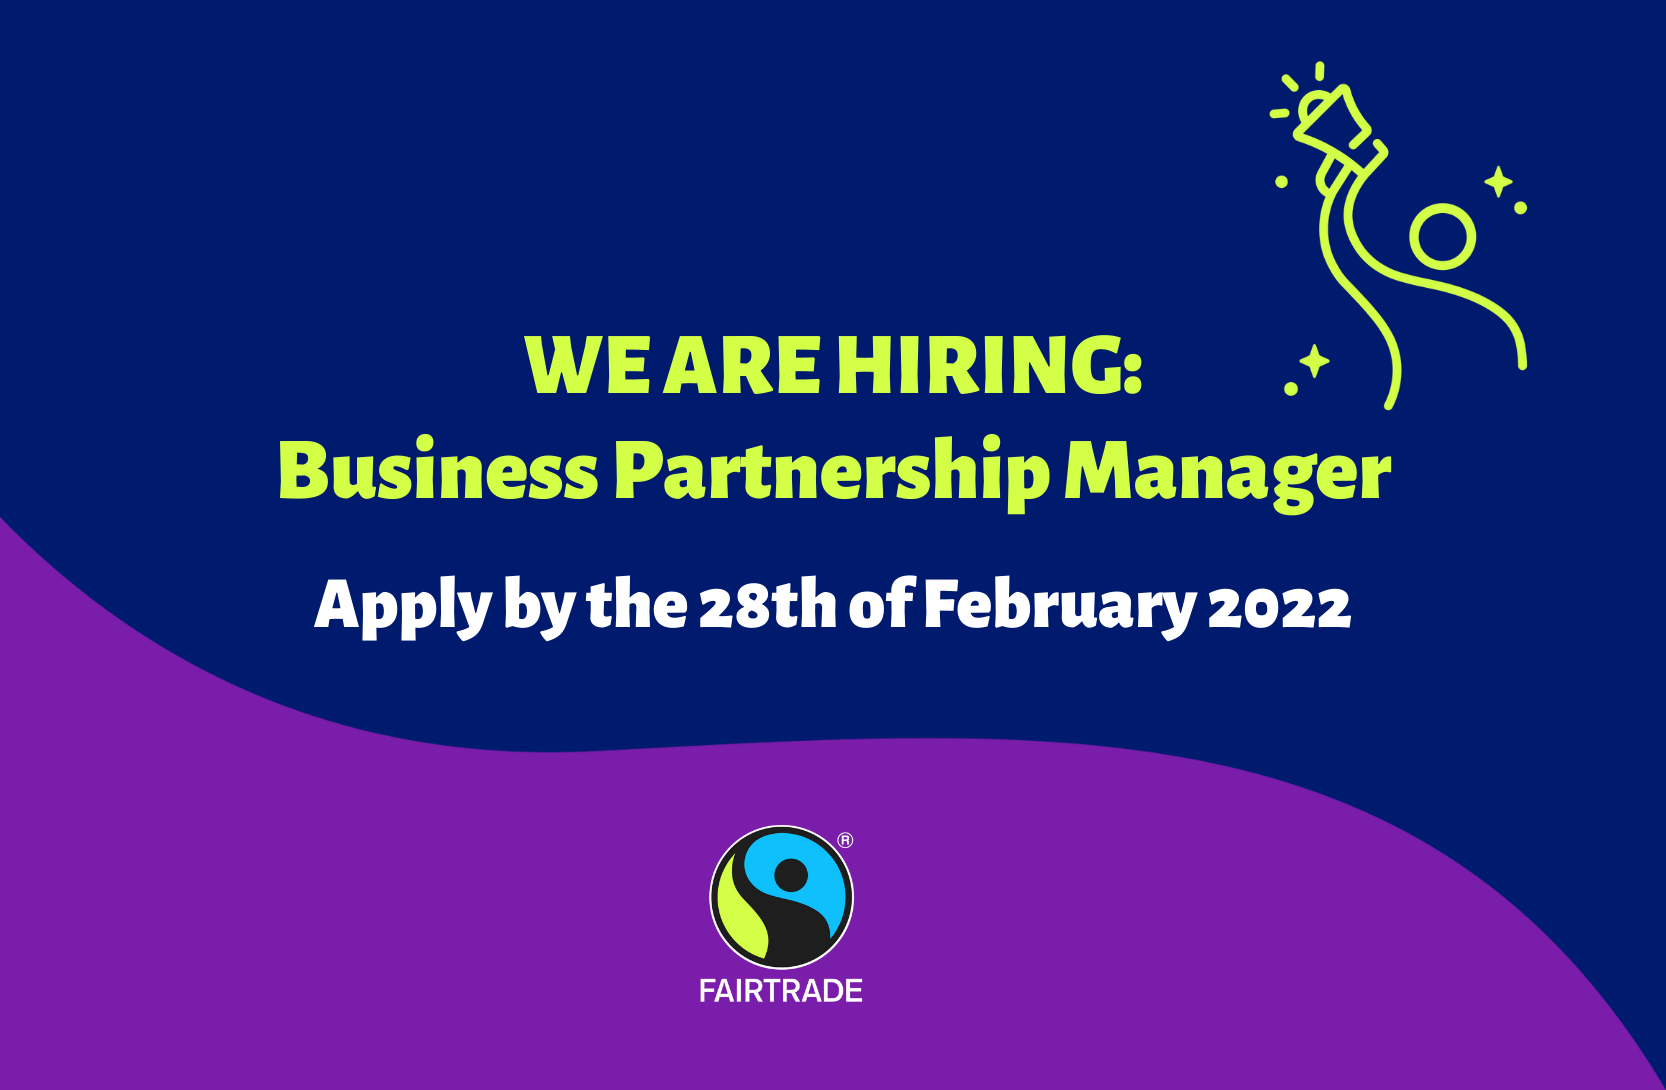 Teksti: We are hiring: Business Partnership Manager.